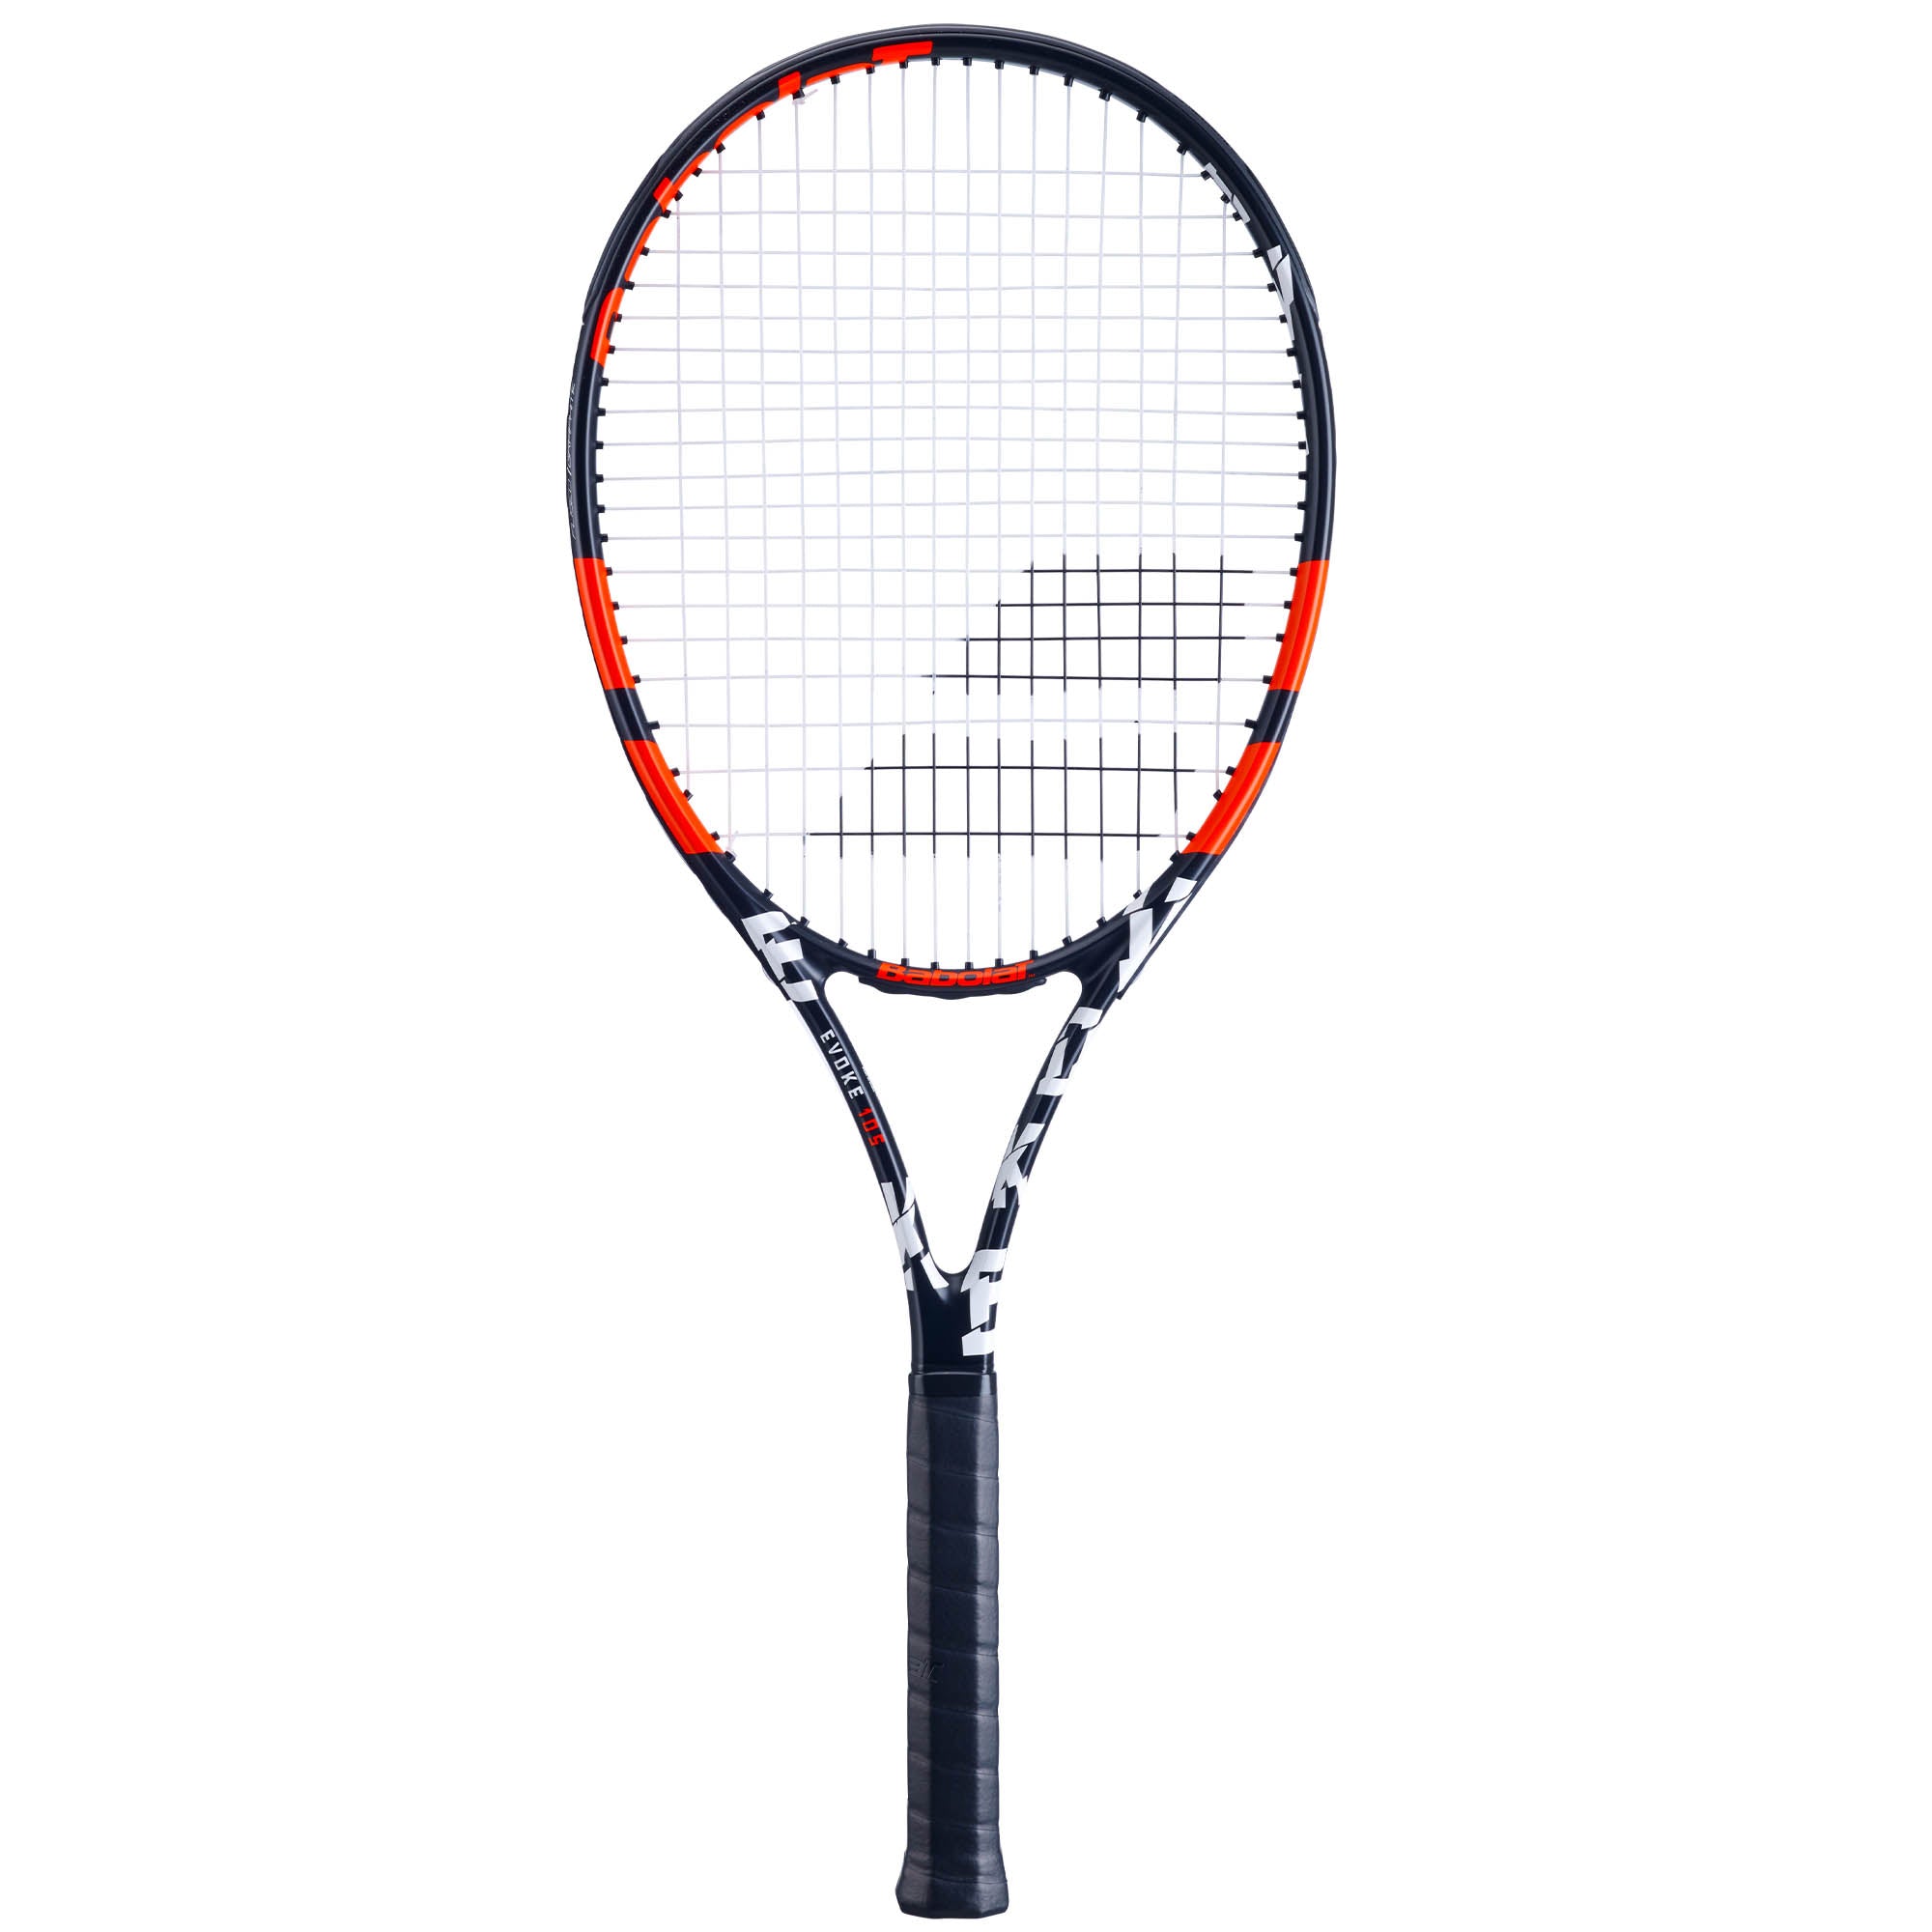 Babolat Evoke 105 Tennis Racket